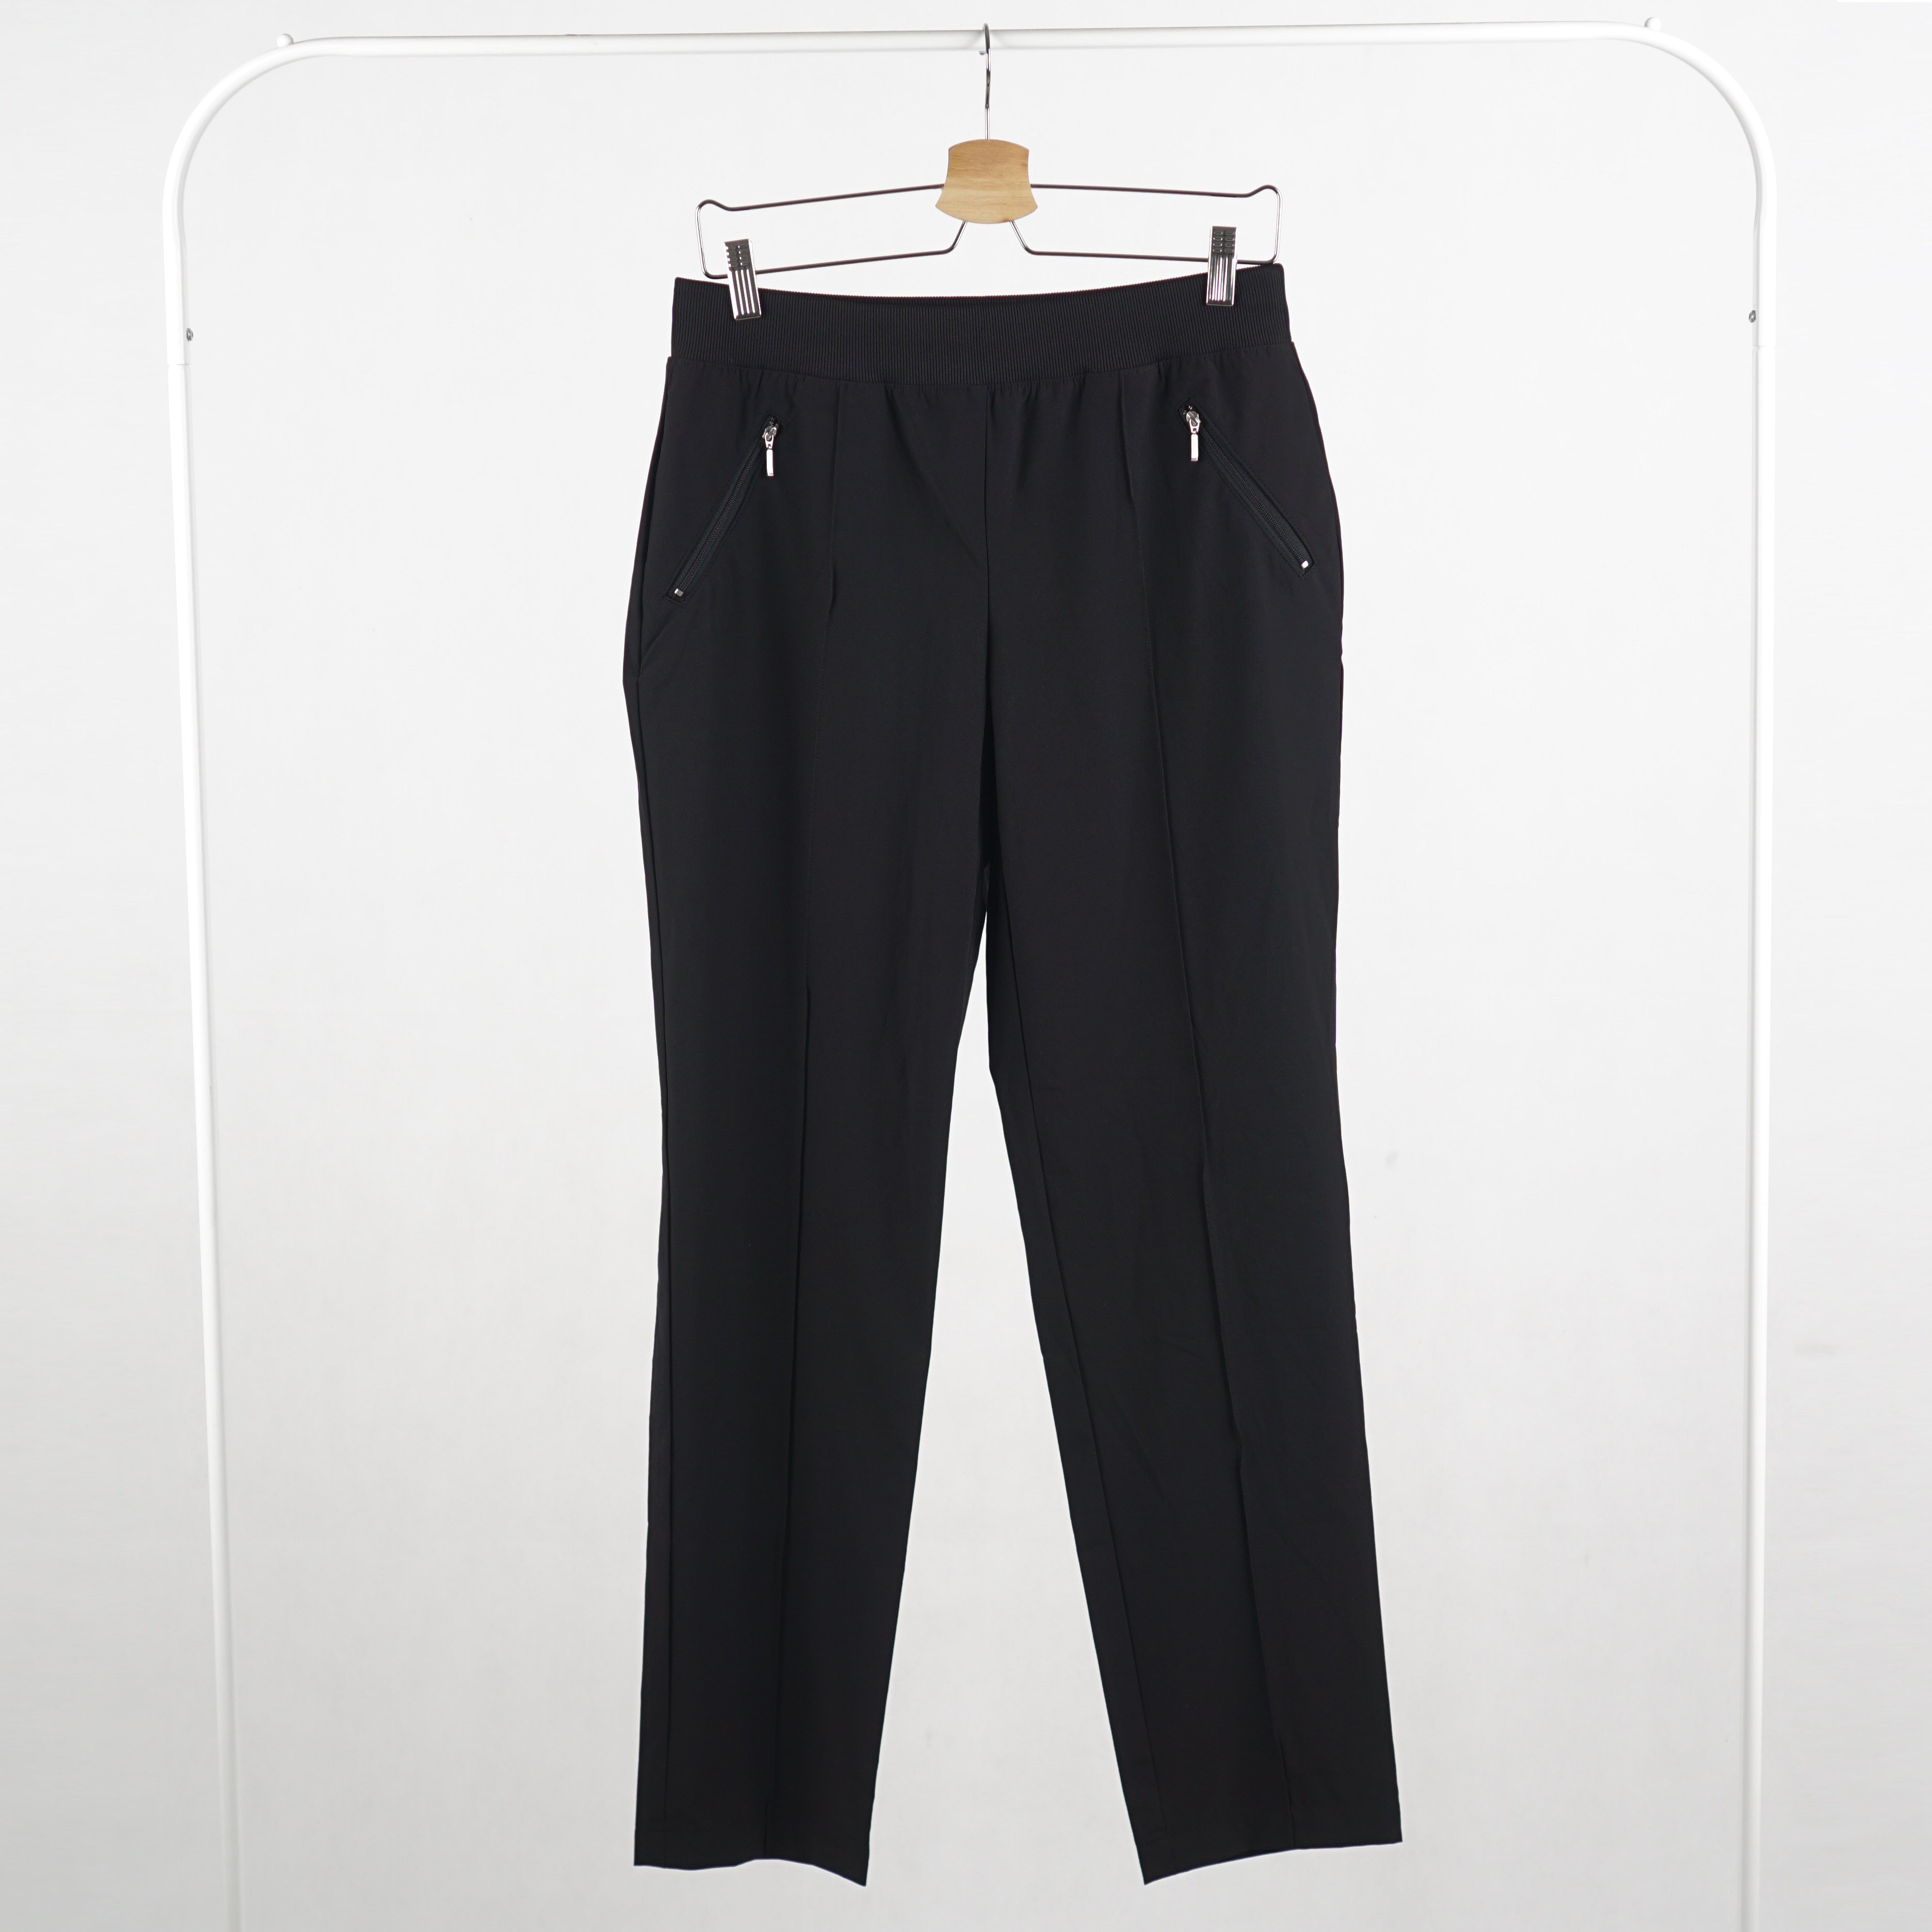 Celana Panjang Wanita-Zenergy Women Pants (Size Besar)  [ZNP 01]